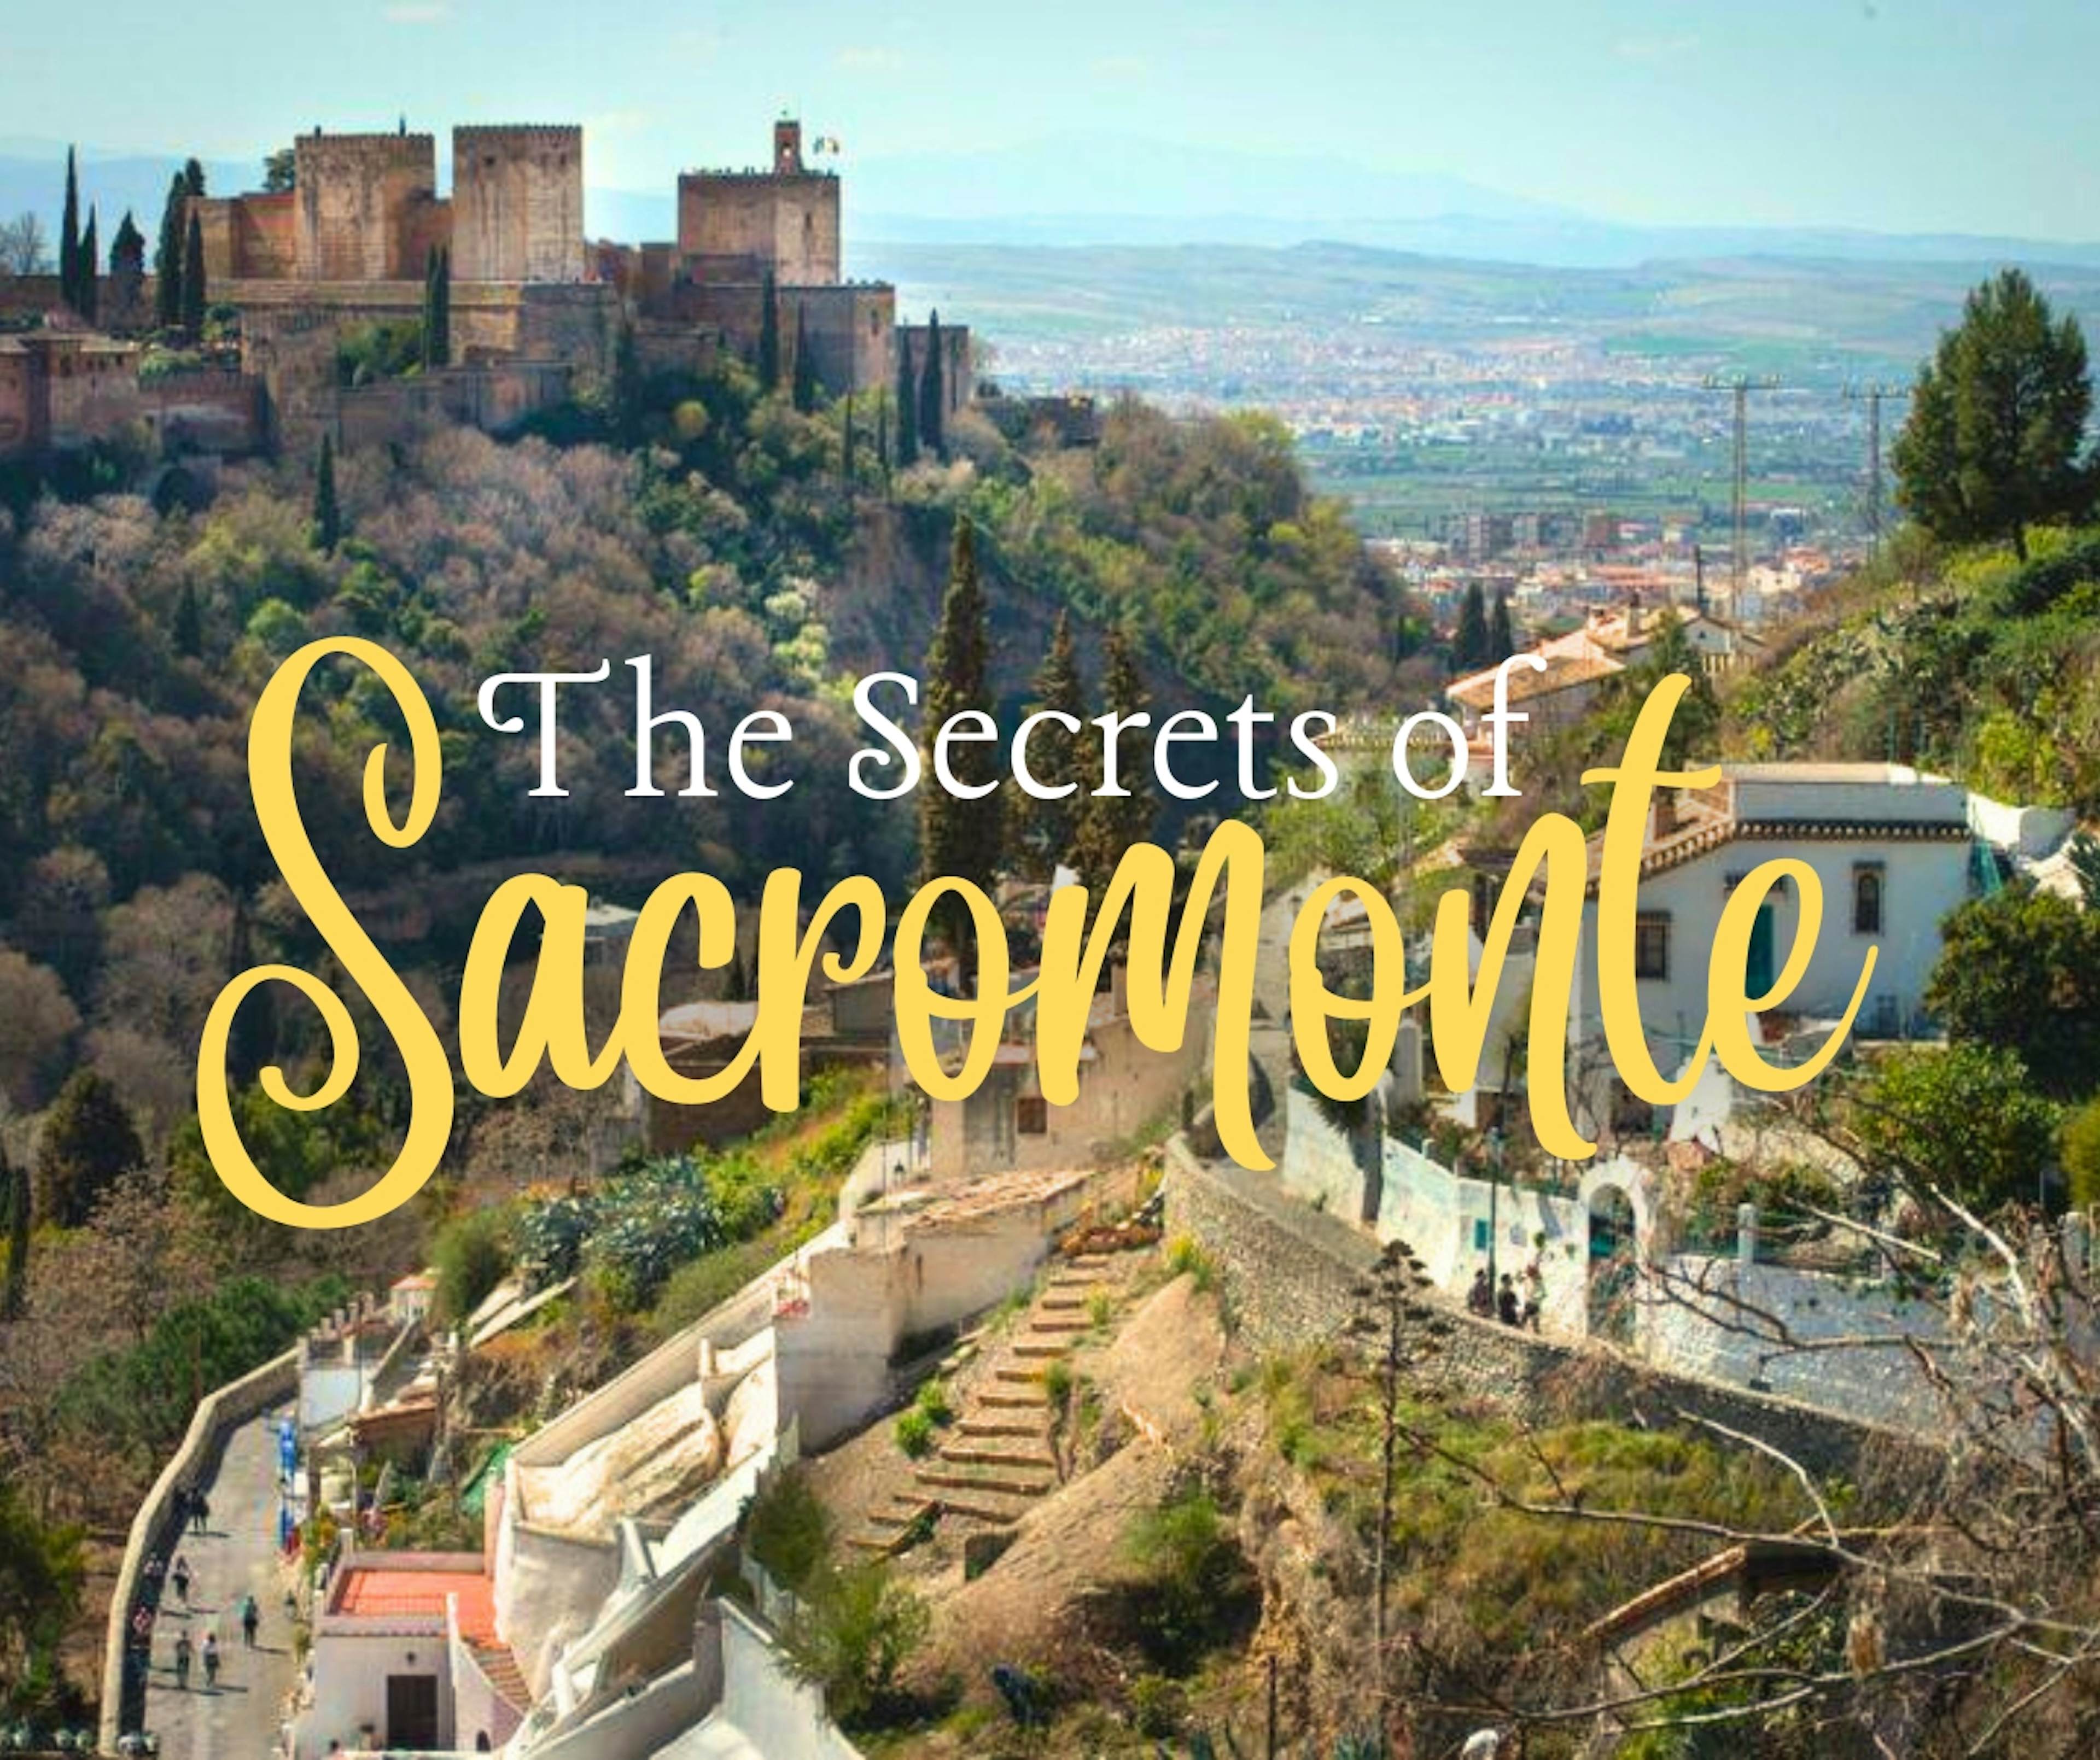 Secrets of Sacromonte, Granada image